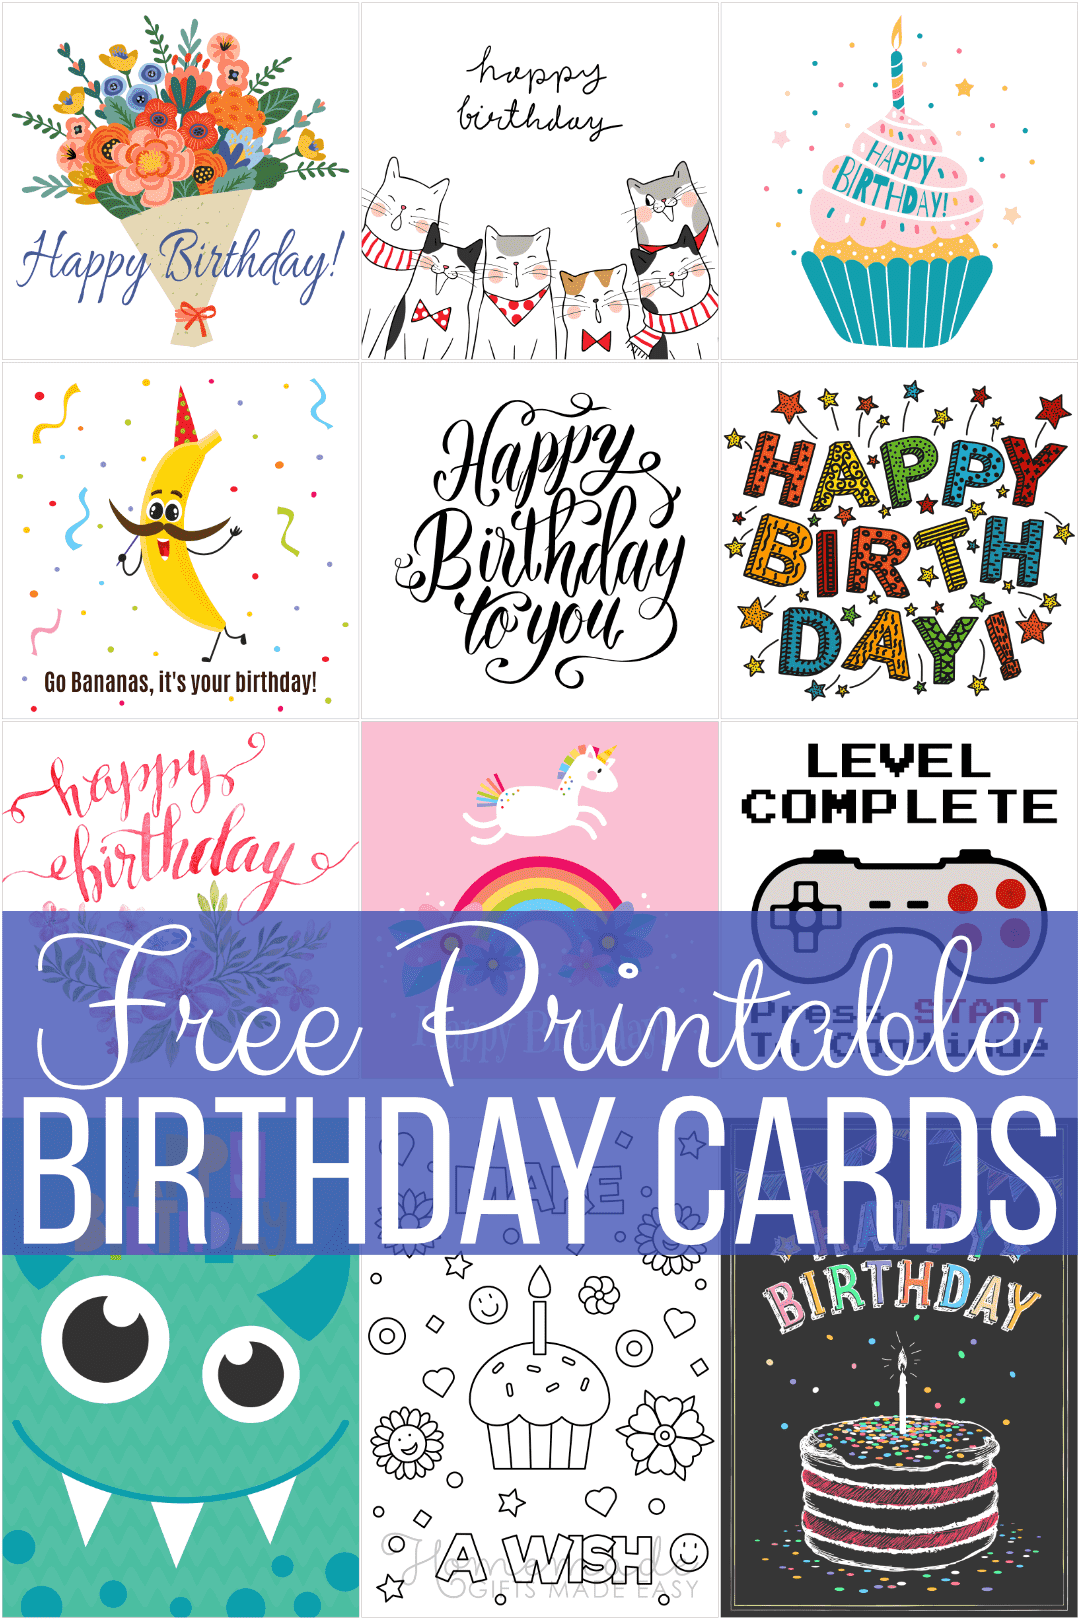 Free birthday cardsd